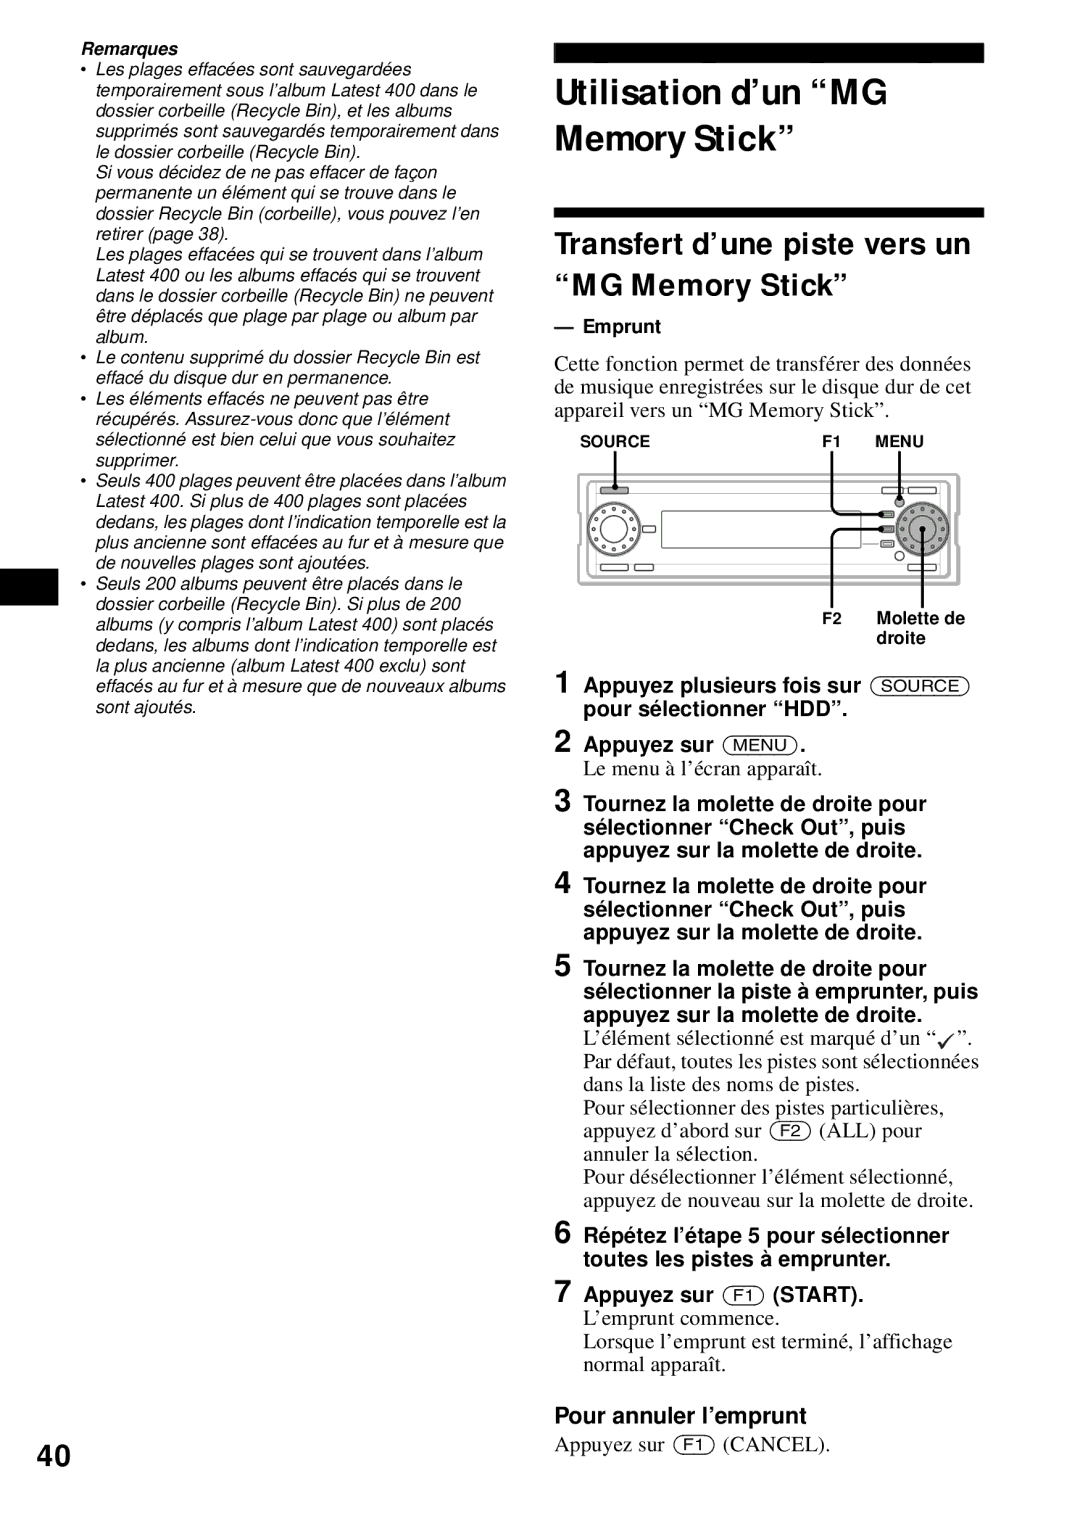 Sony MEX-1HD operating instructions Transfert d’une piste vers un MG Memory Stick, Emprunt, Pour annuler l’emprunt 